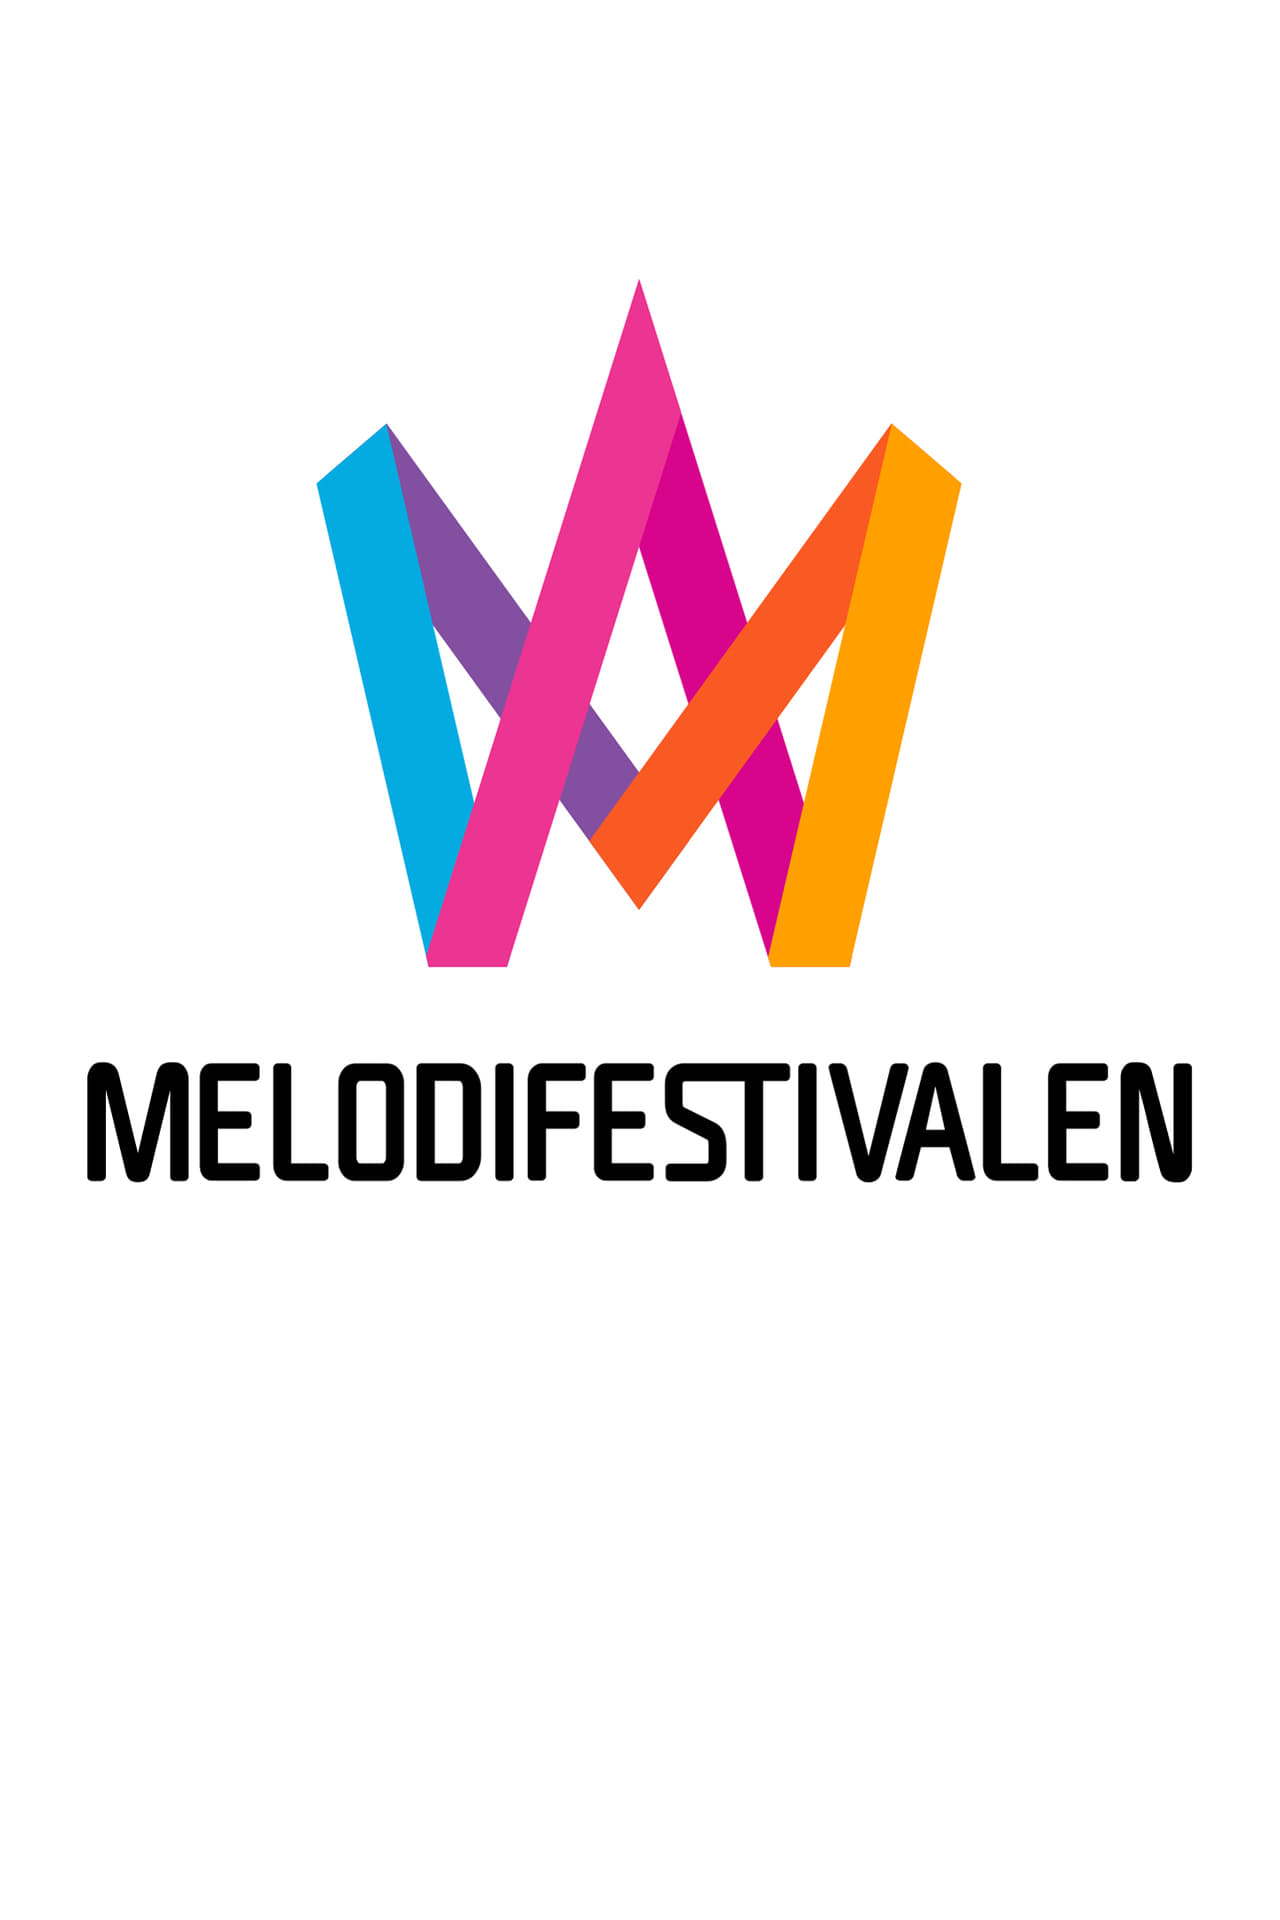 Melodifestivalen (2010)